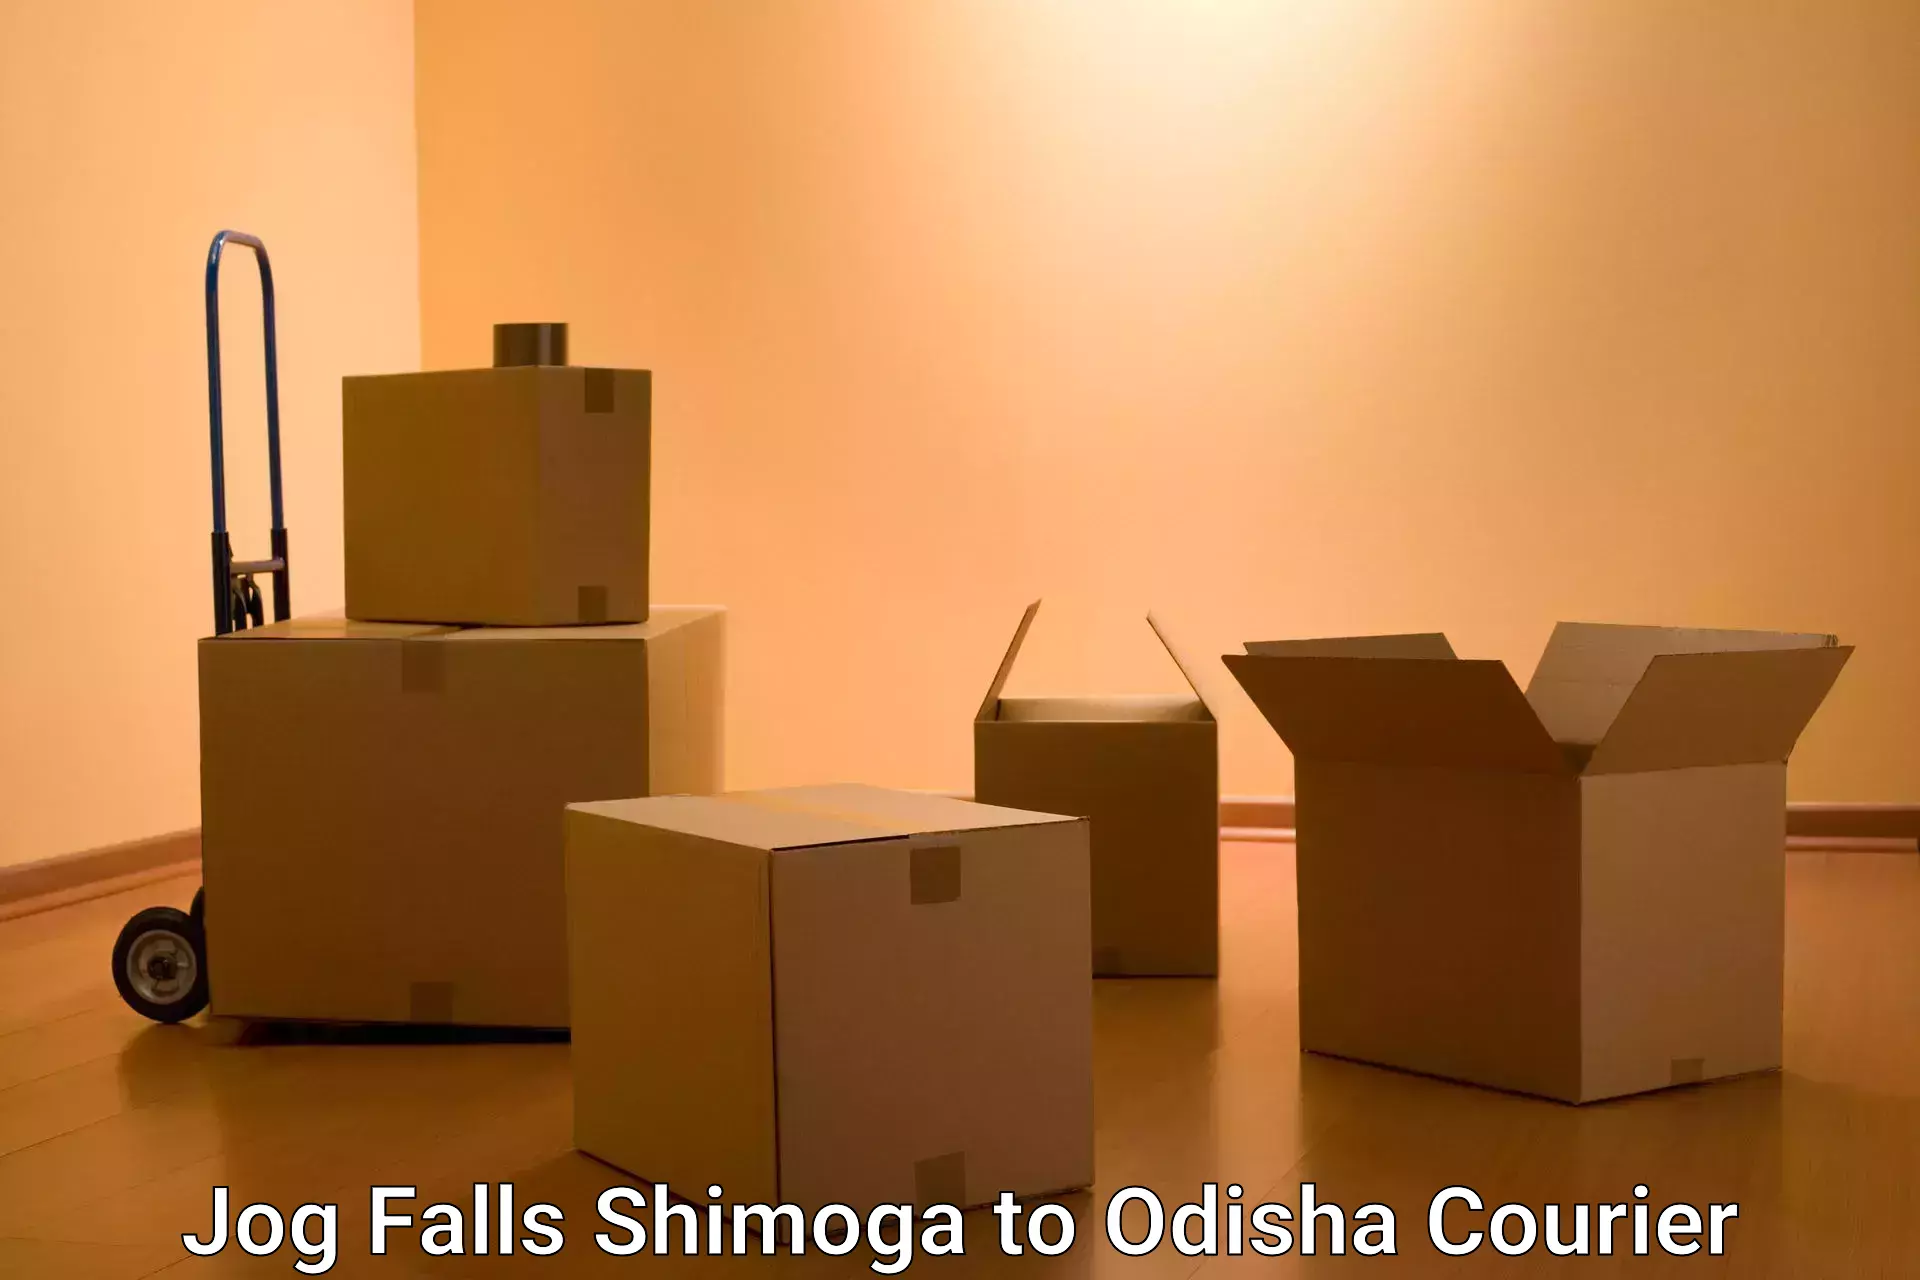 Courier service booking Jog Falls Shimoga to Odisha